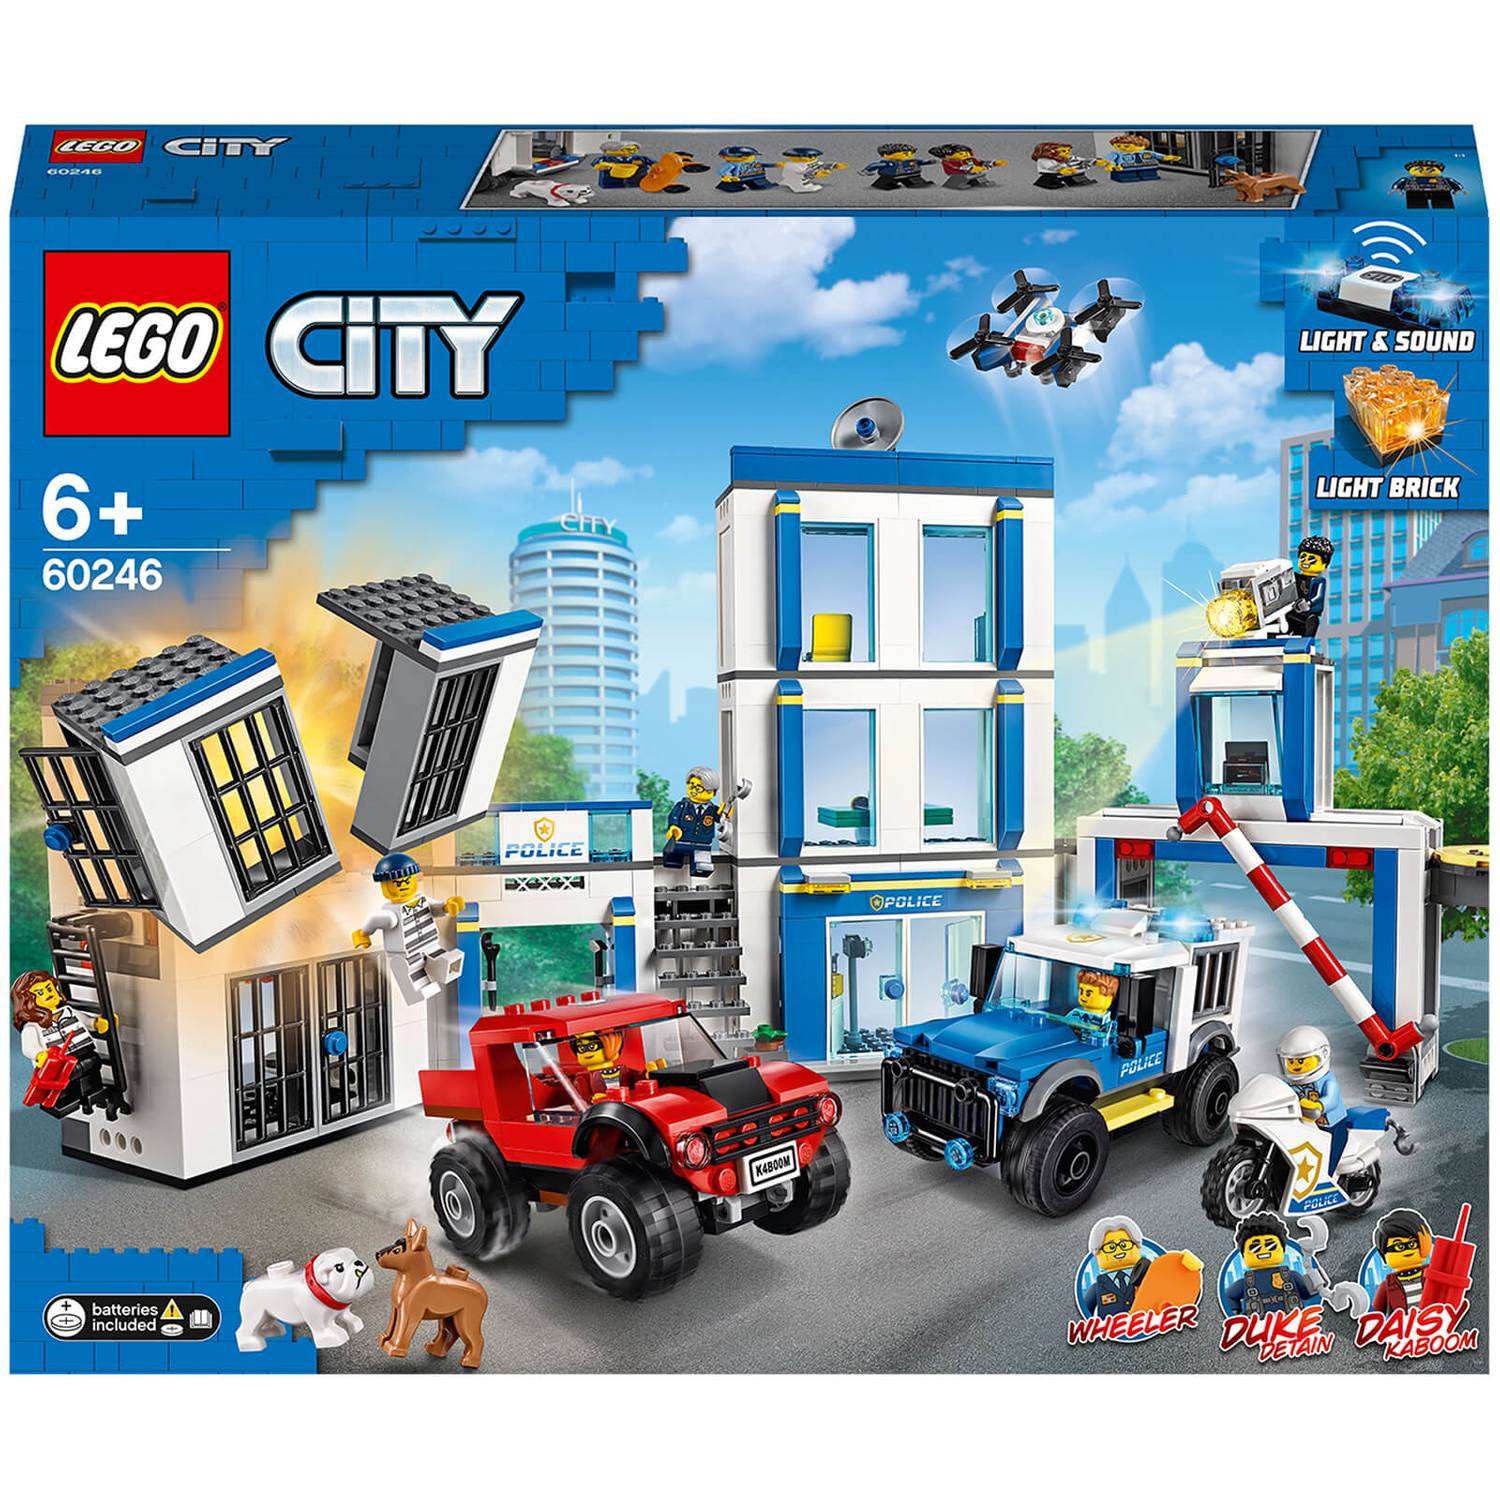 zavvi.com: LEGO City: Police Station Building Building Set (60246) for $84.99 + FS